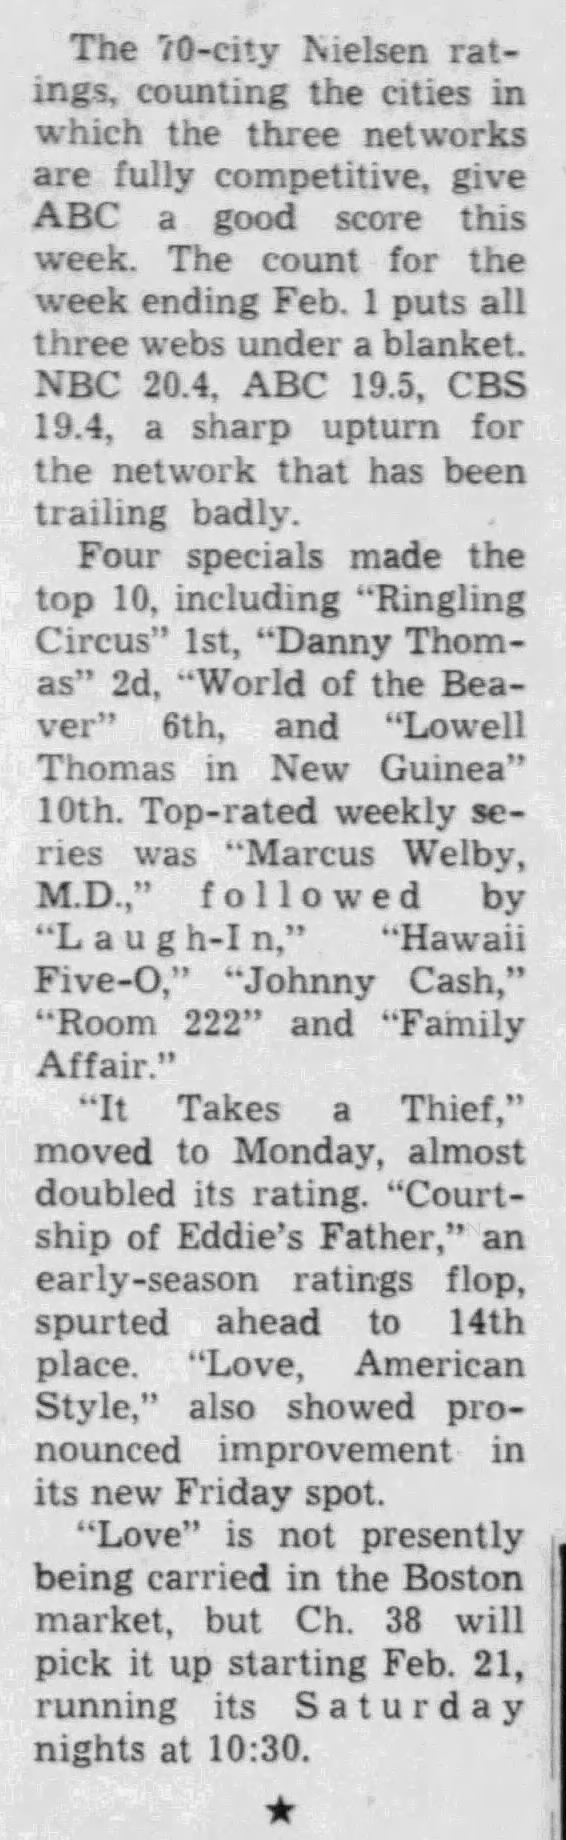 Nielsen ratings week of January 26th - February 1st, 1970